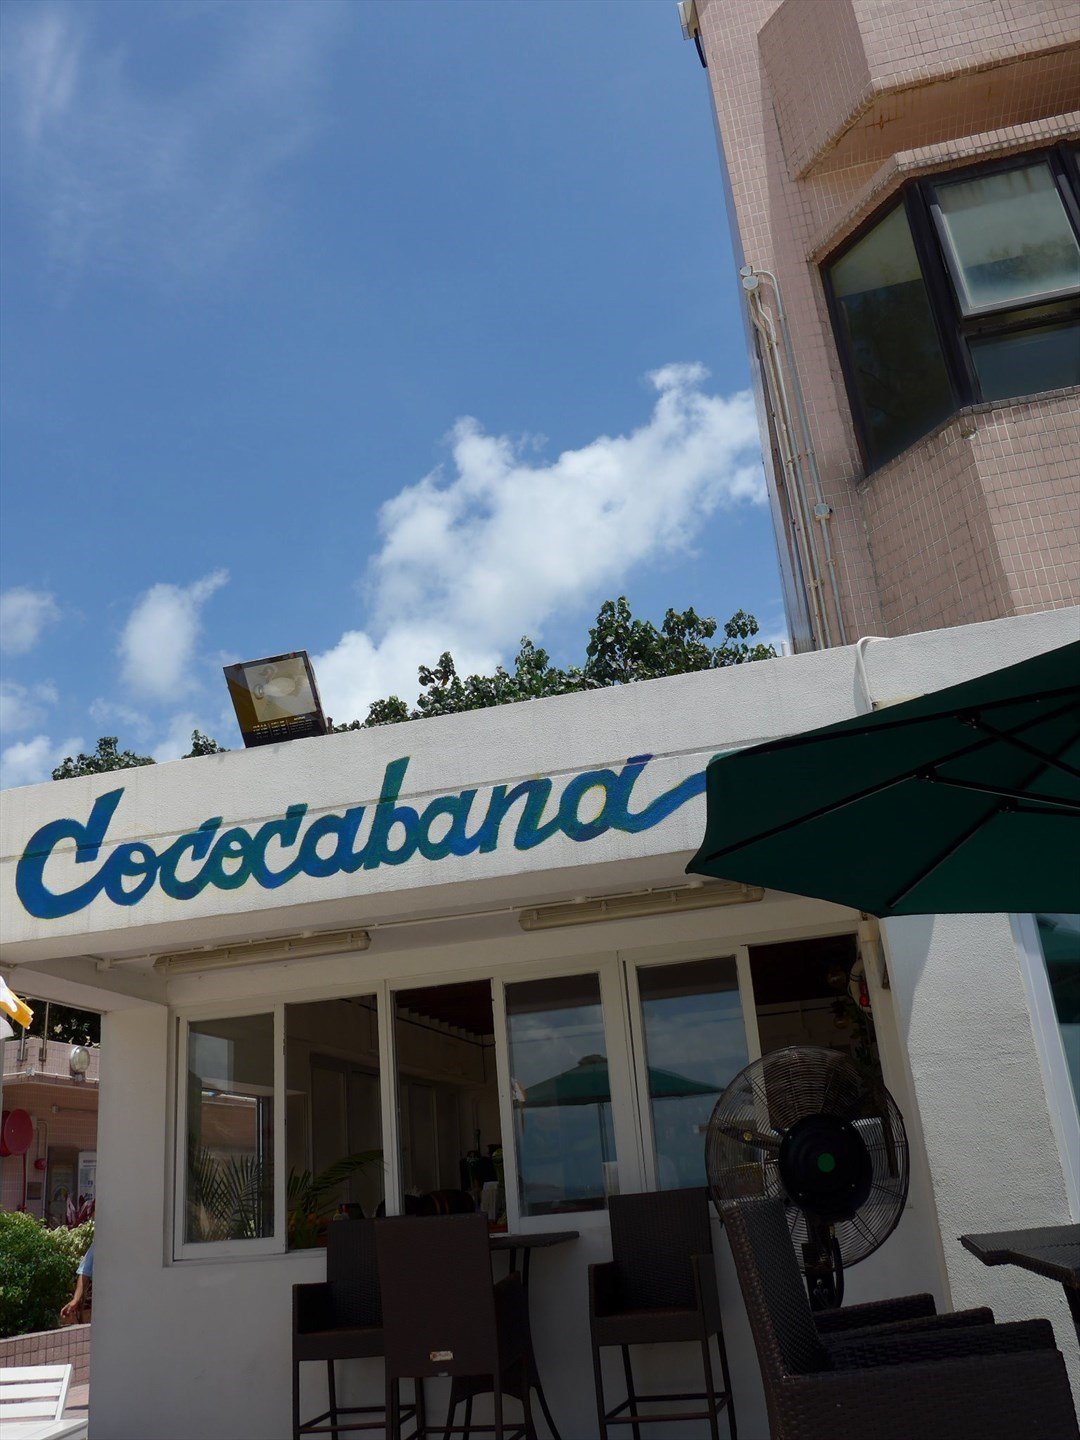 Cococabana